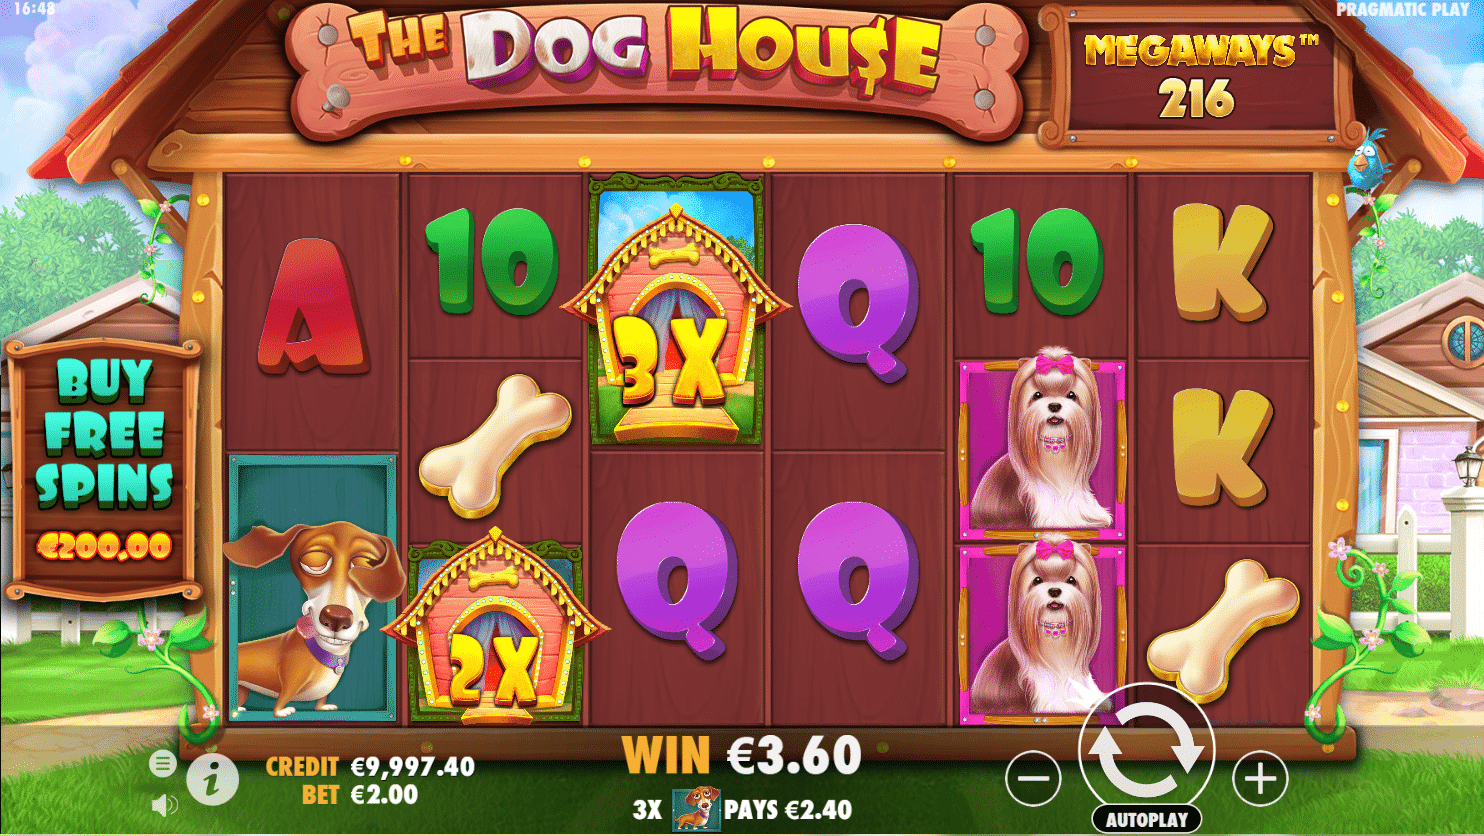 The Dog House Megaways gameplay screenshot